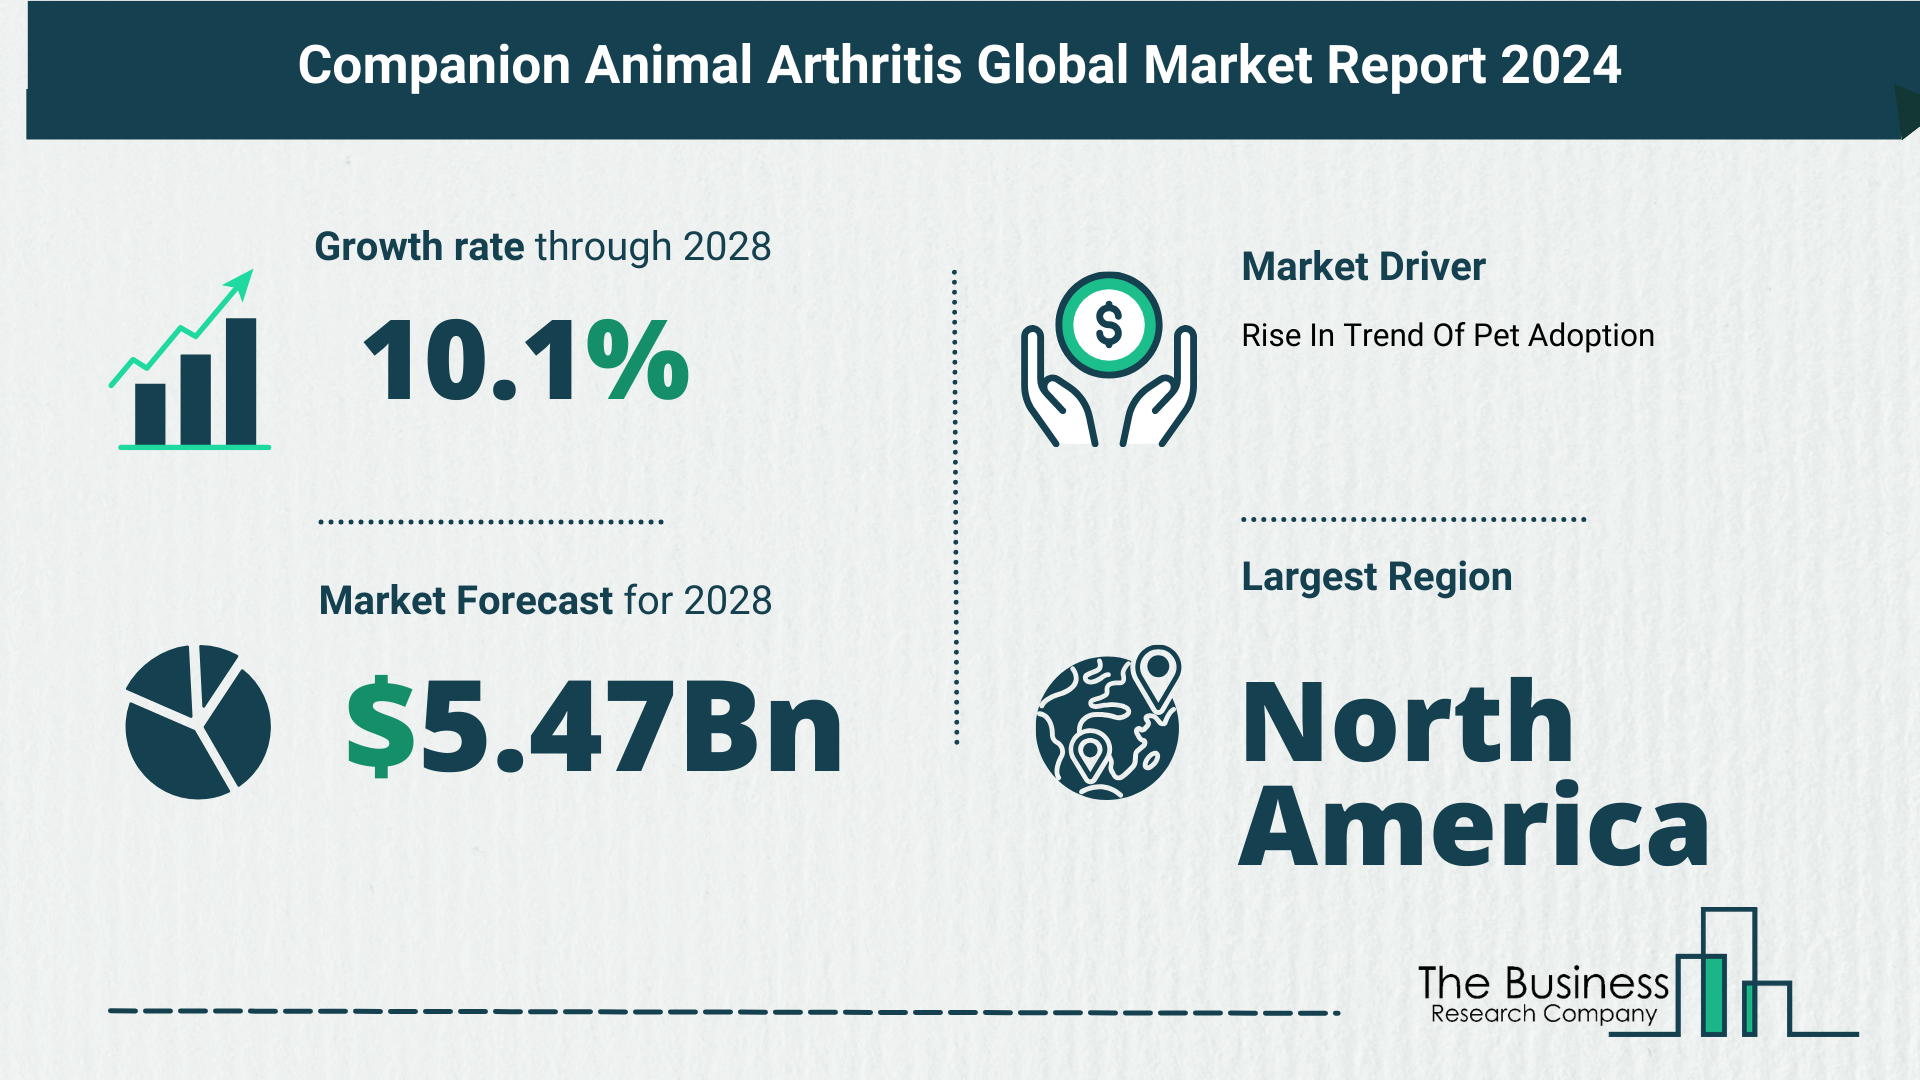 Key Insights On The Companion Animal Arthritis Market 2024 – Size, Driver, And Major Players